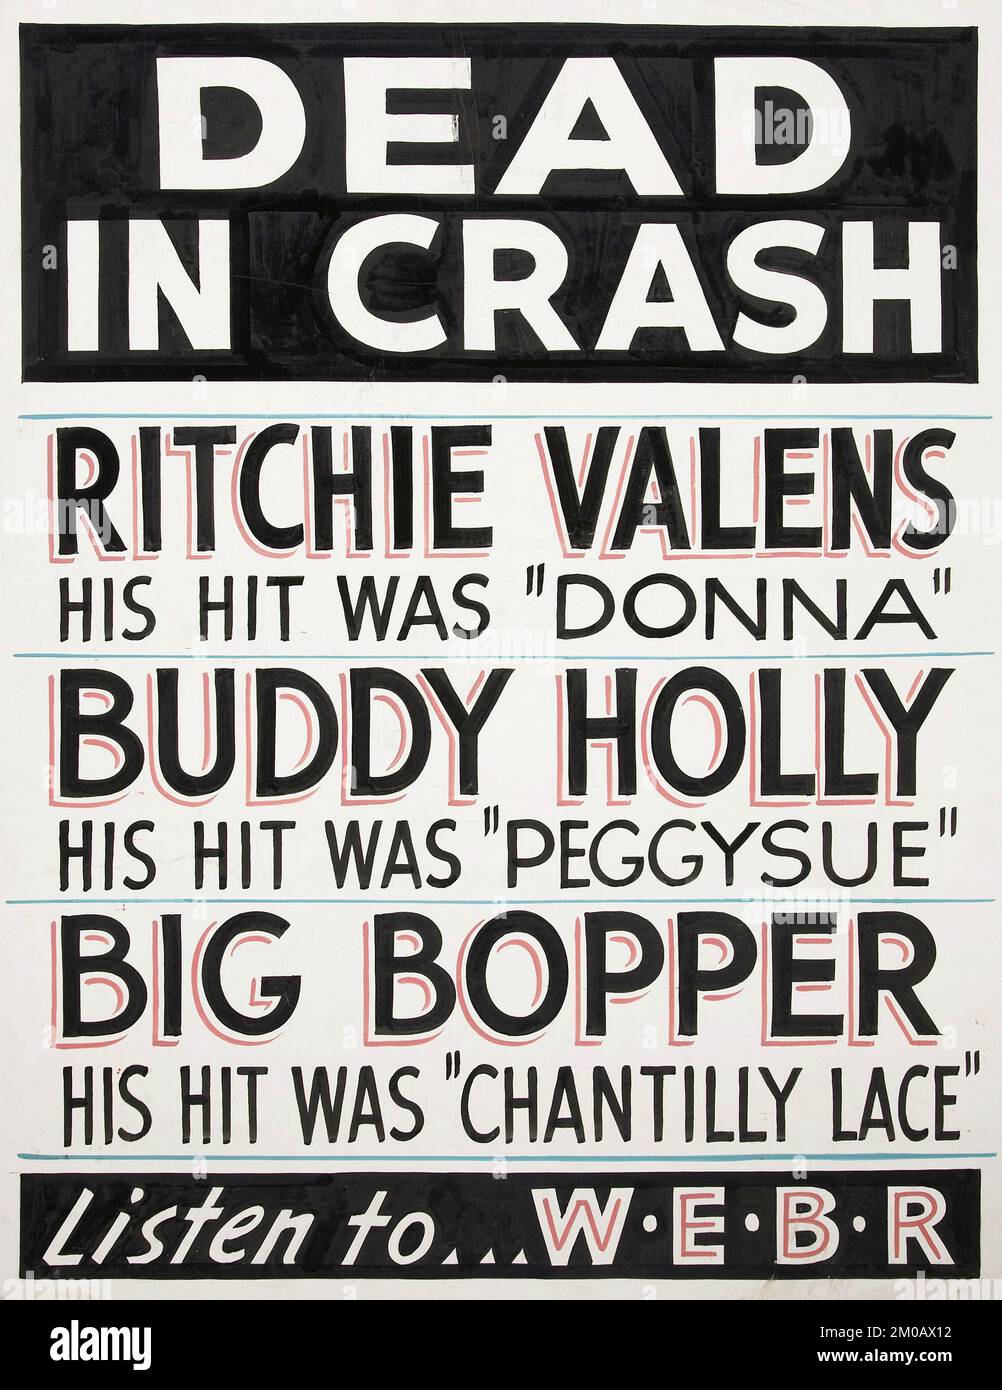 Buddy Holly, Ritchie Valens y Big Bopper Dead in Crash Poster (WEBR, 1959) Foto de stock